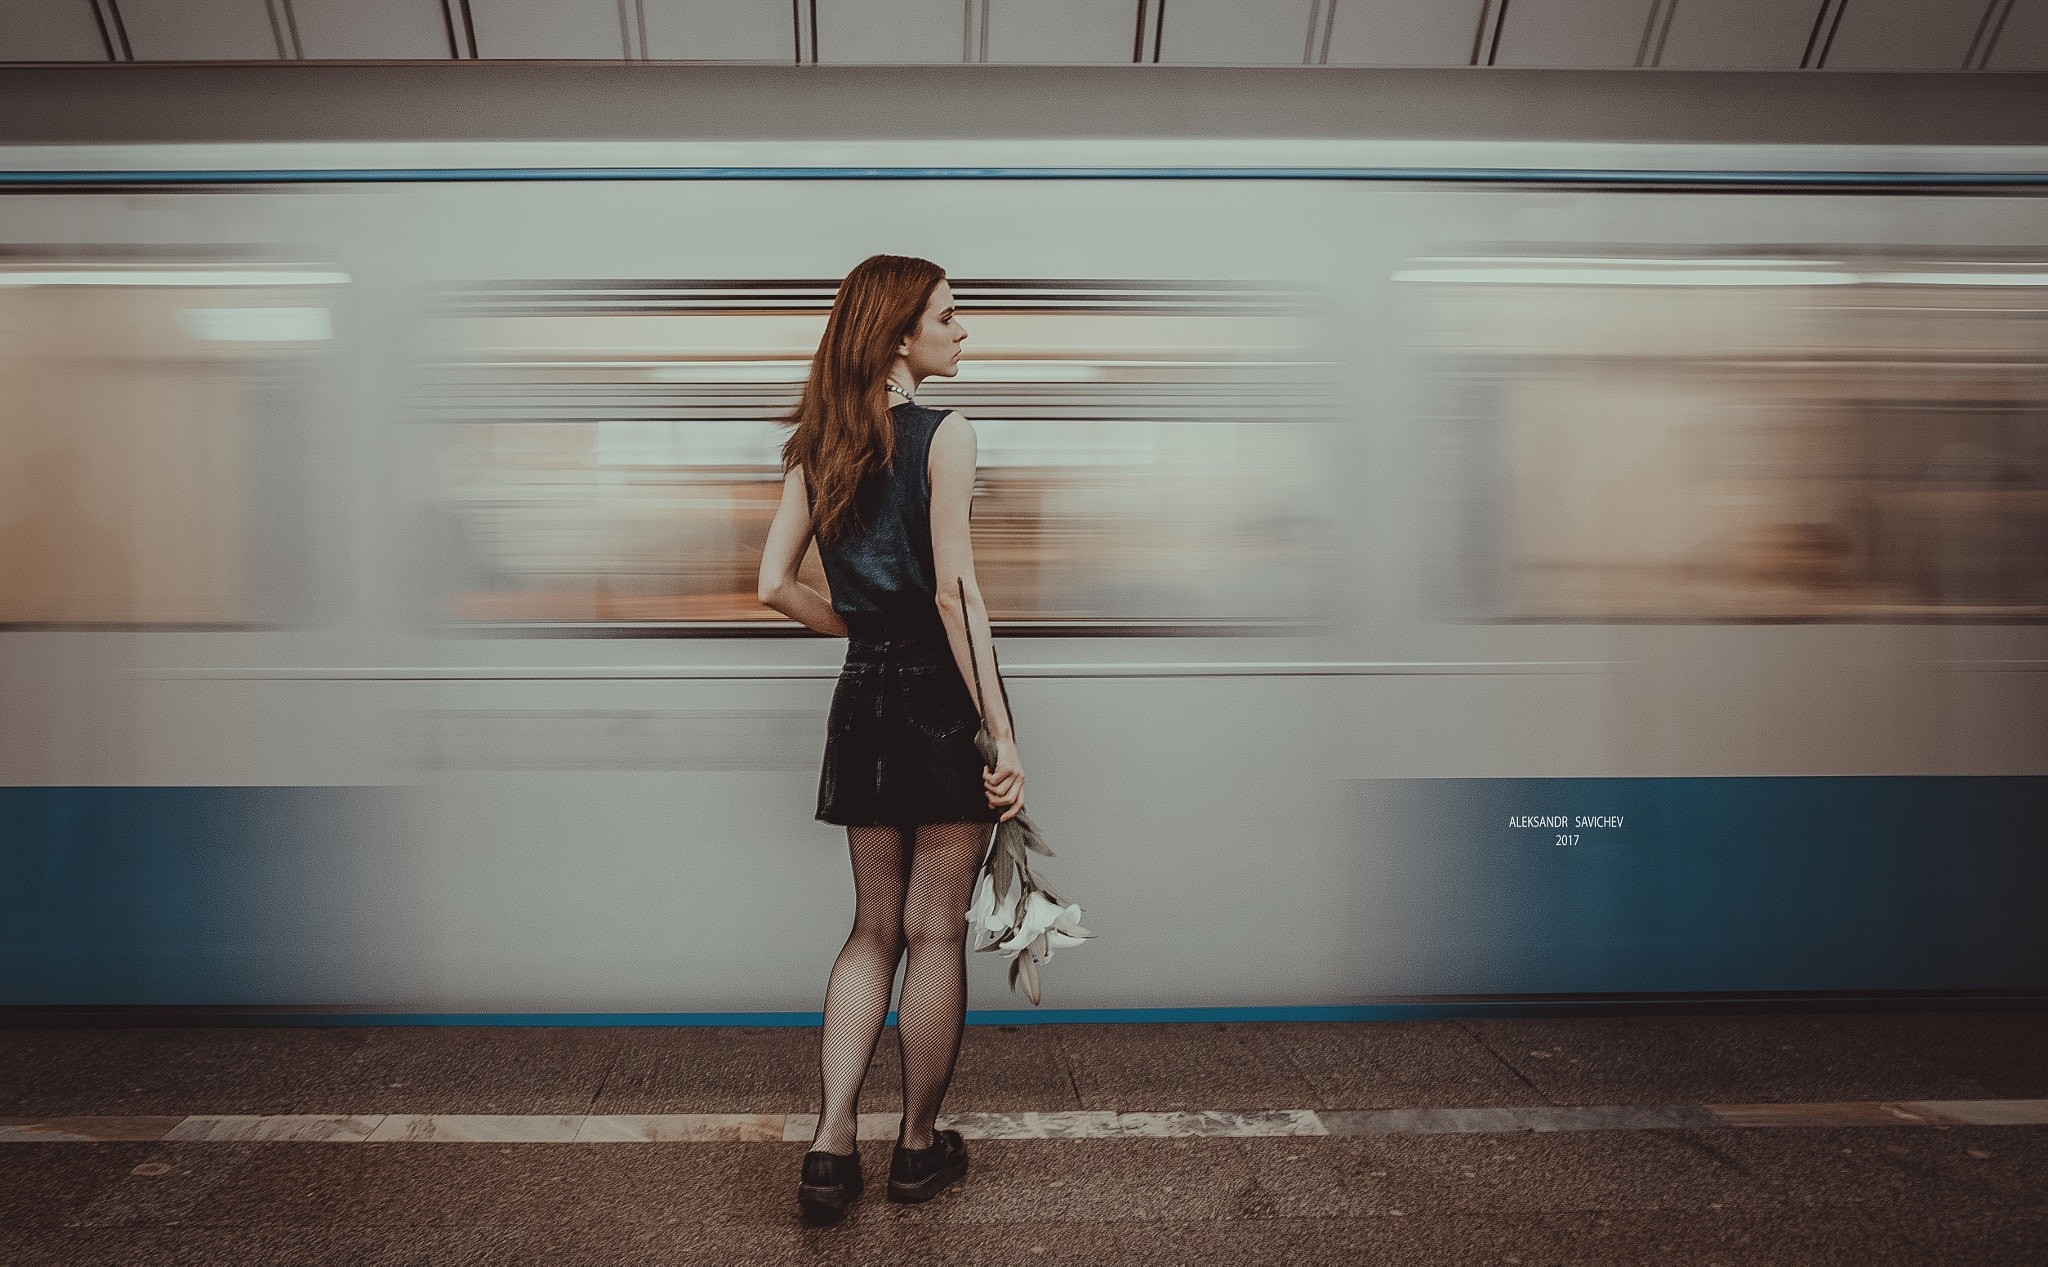 Aleksandr Savichev Metro Women Model Train 500px 2048x1267